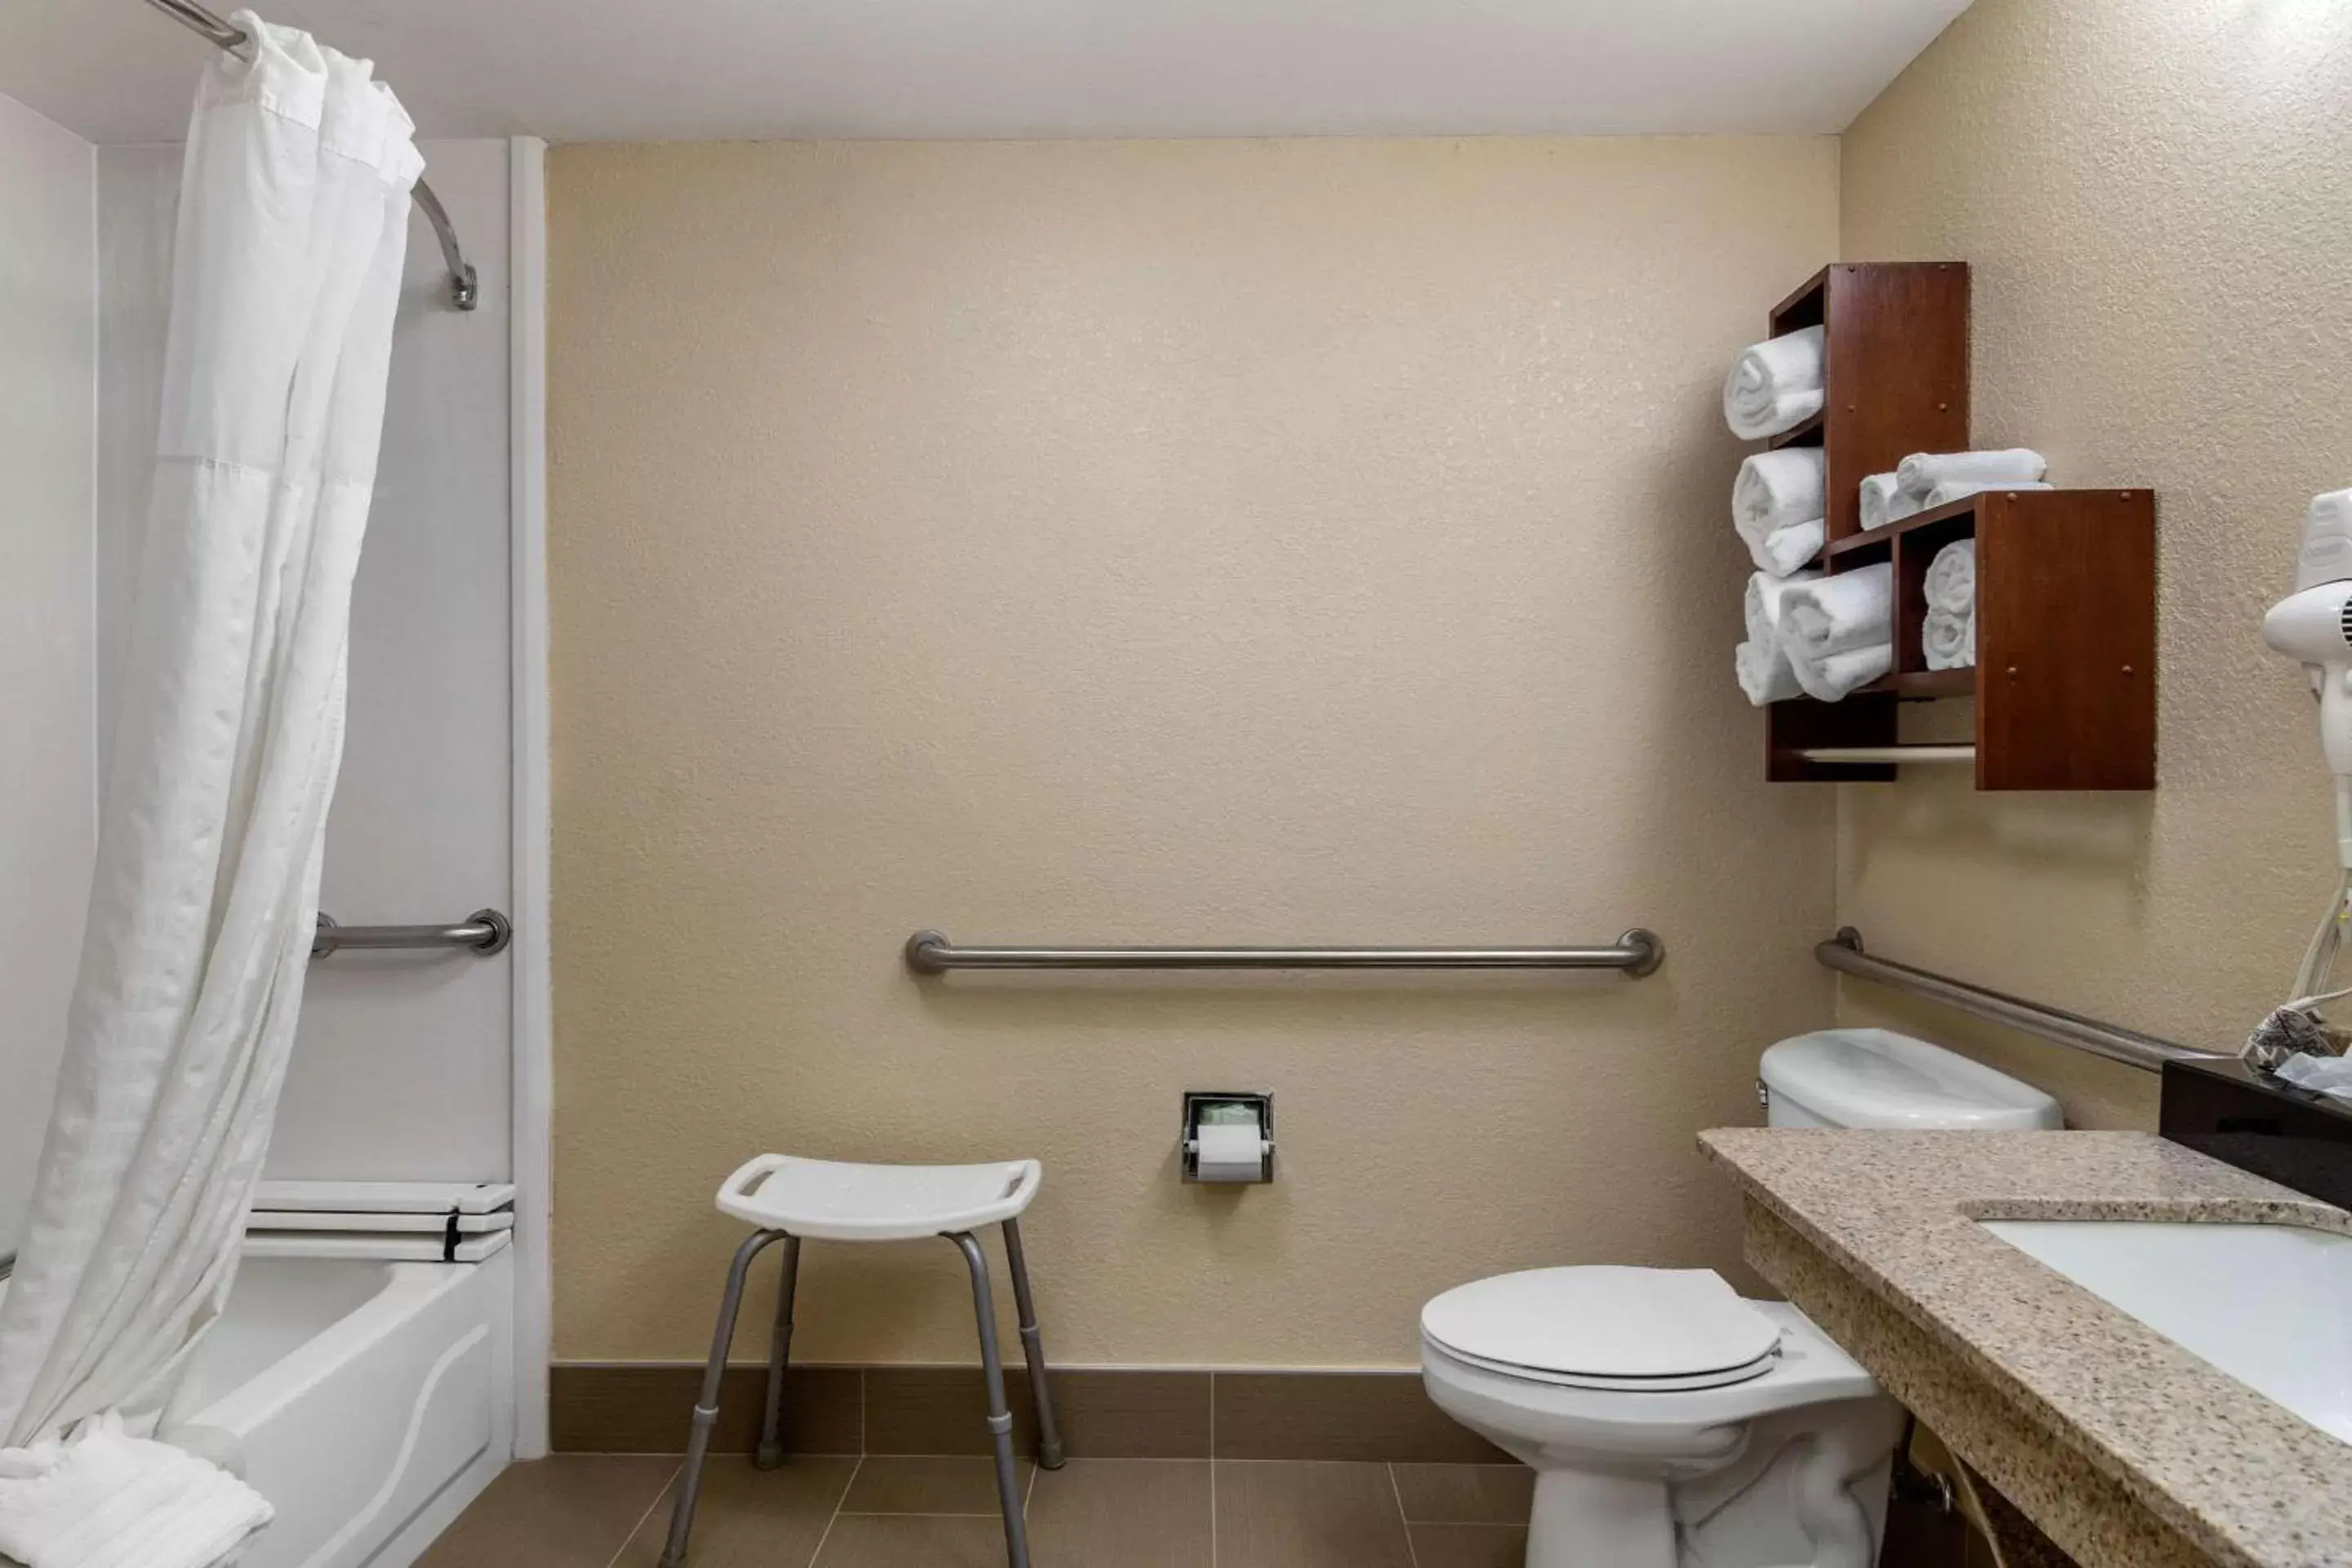 Photo of the whole room, Bathroom in Comfort Suites Woodstock